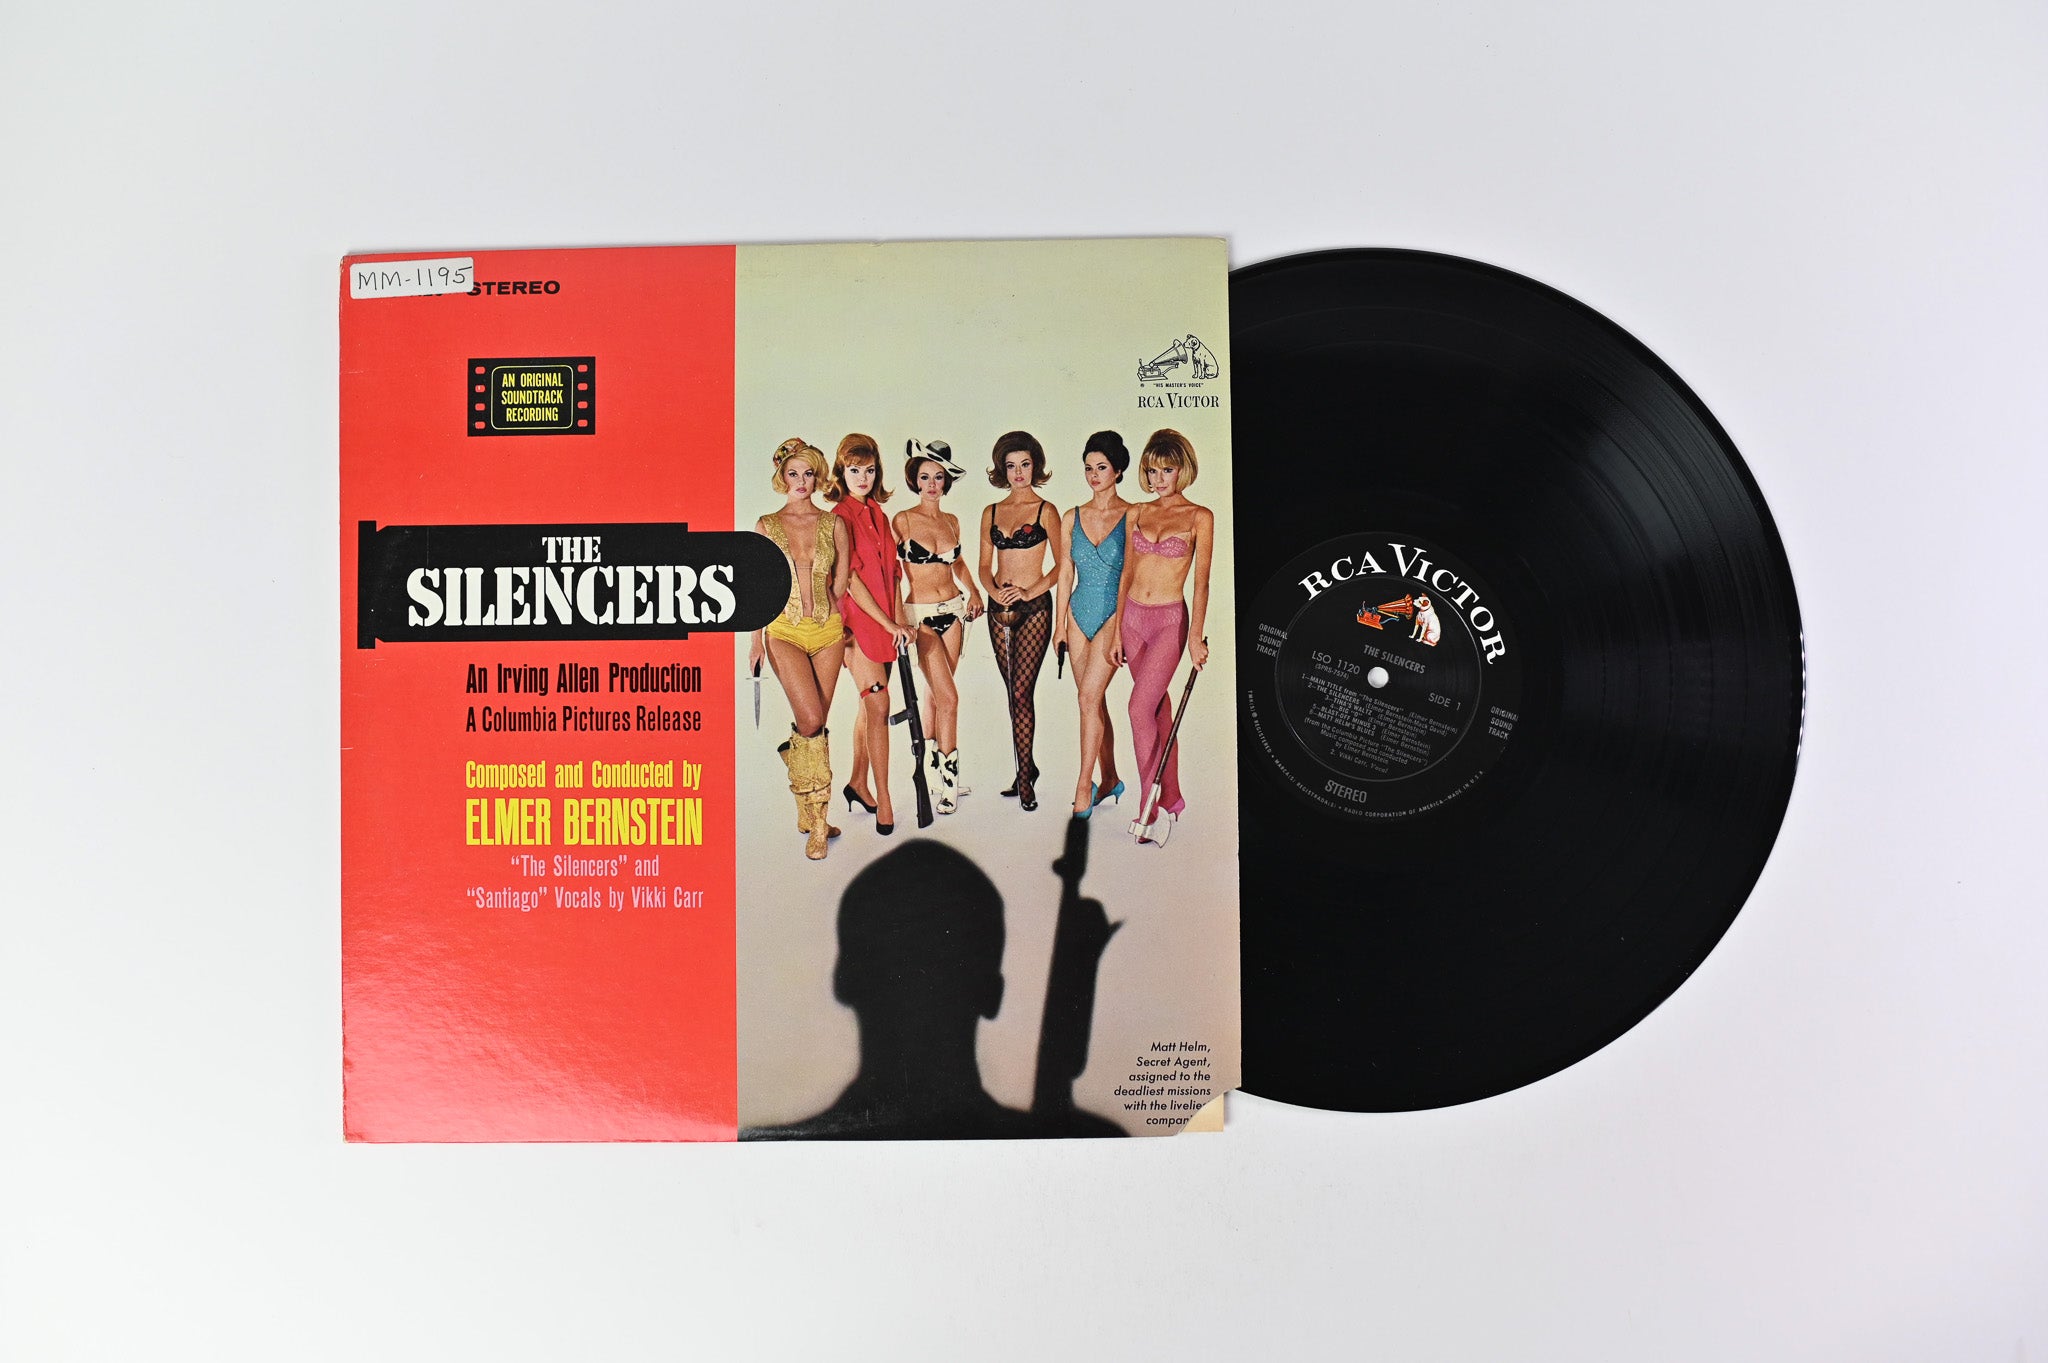 Elmer Bernstein - The Silencers Soundtrack on RCA Victor